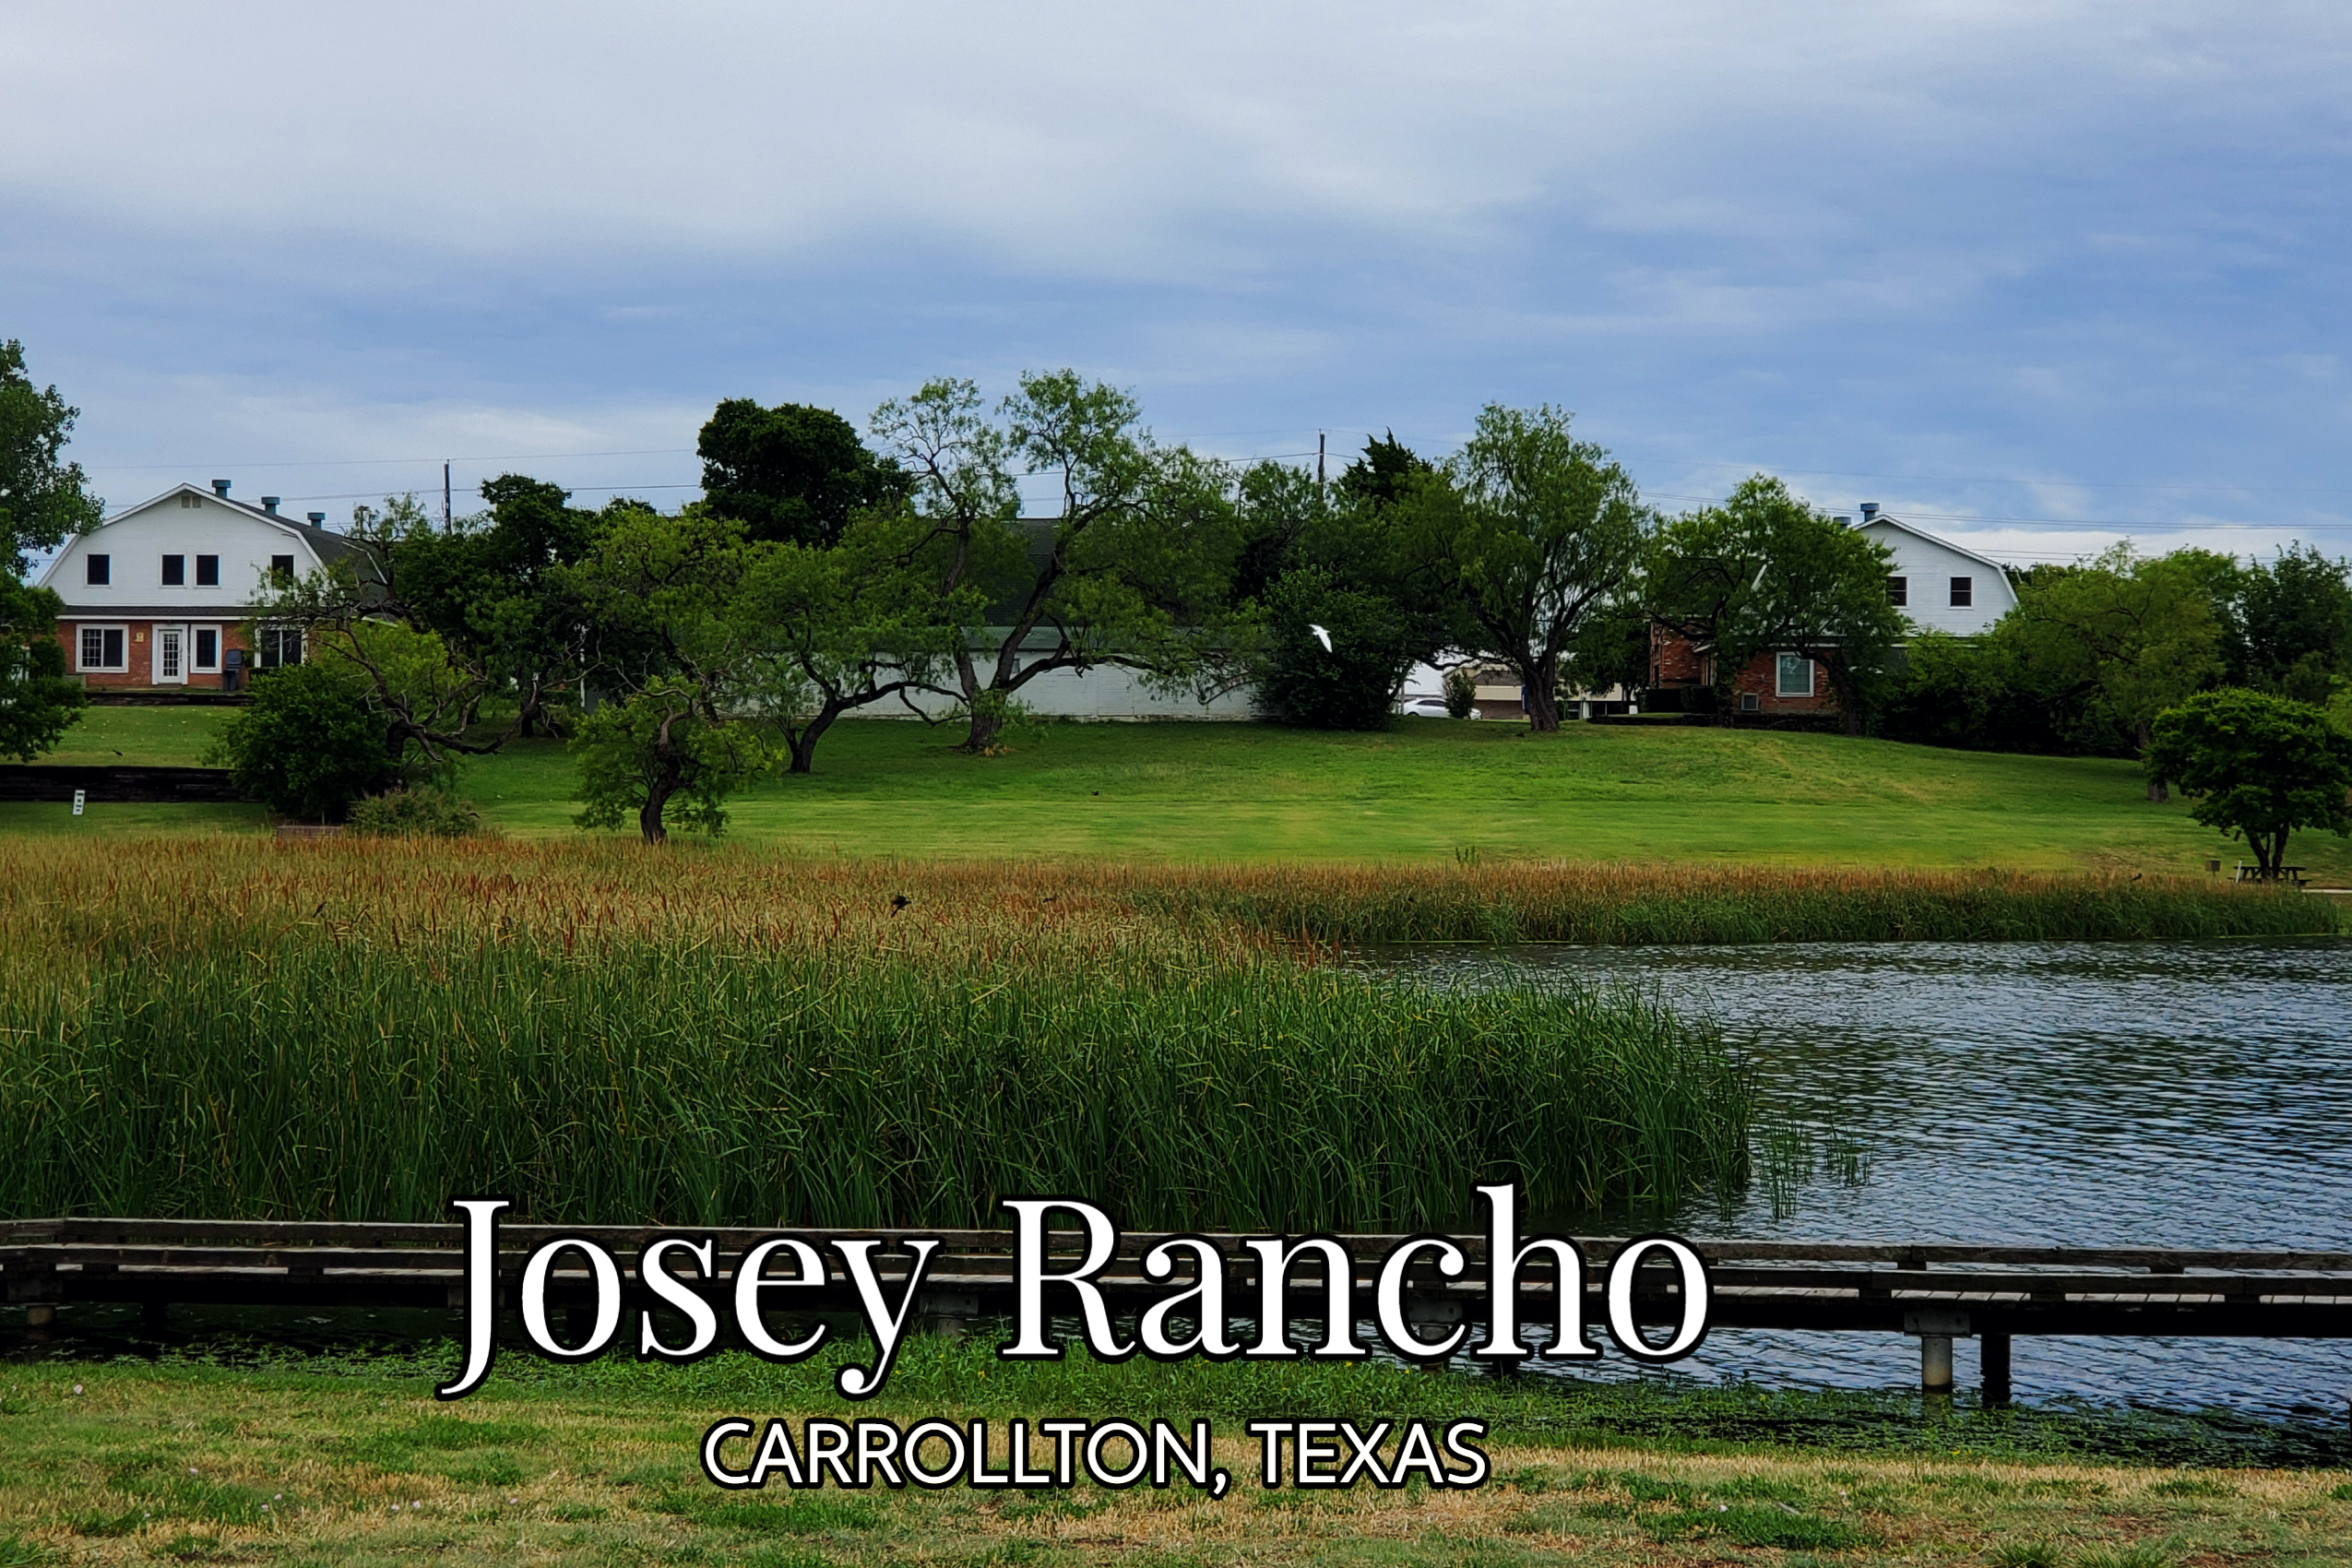 Josey Rancho